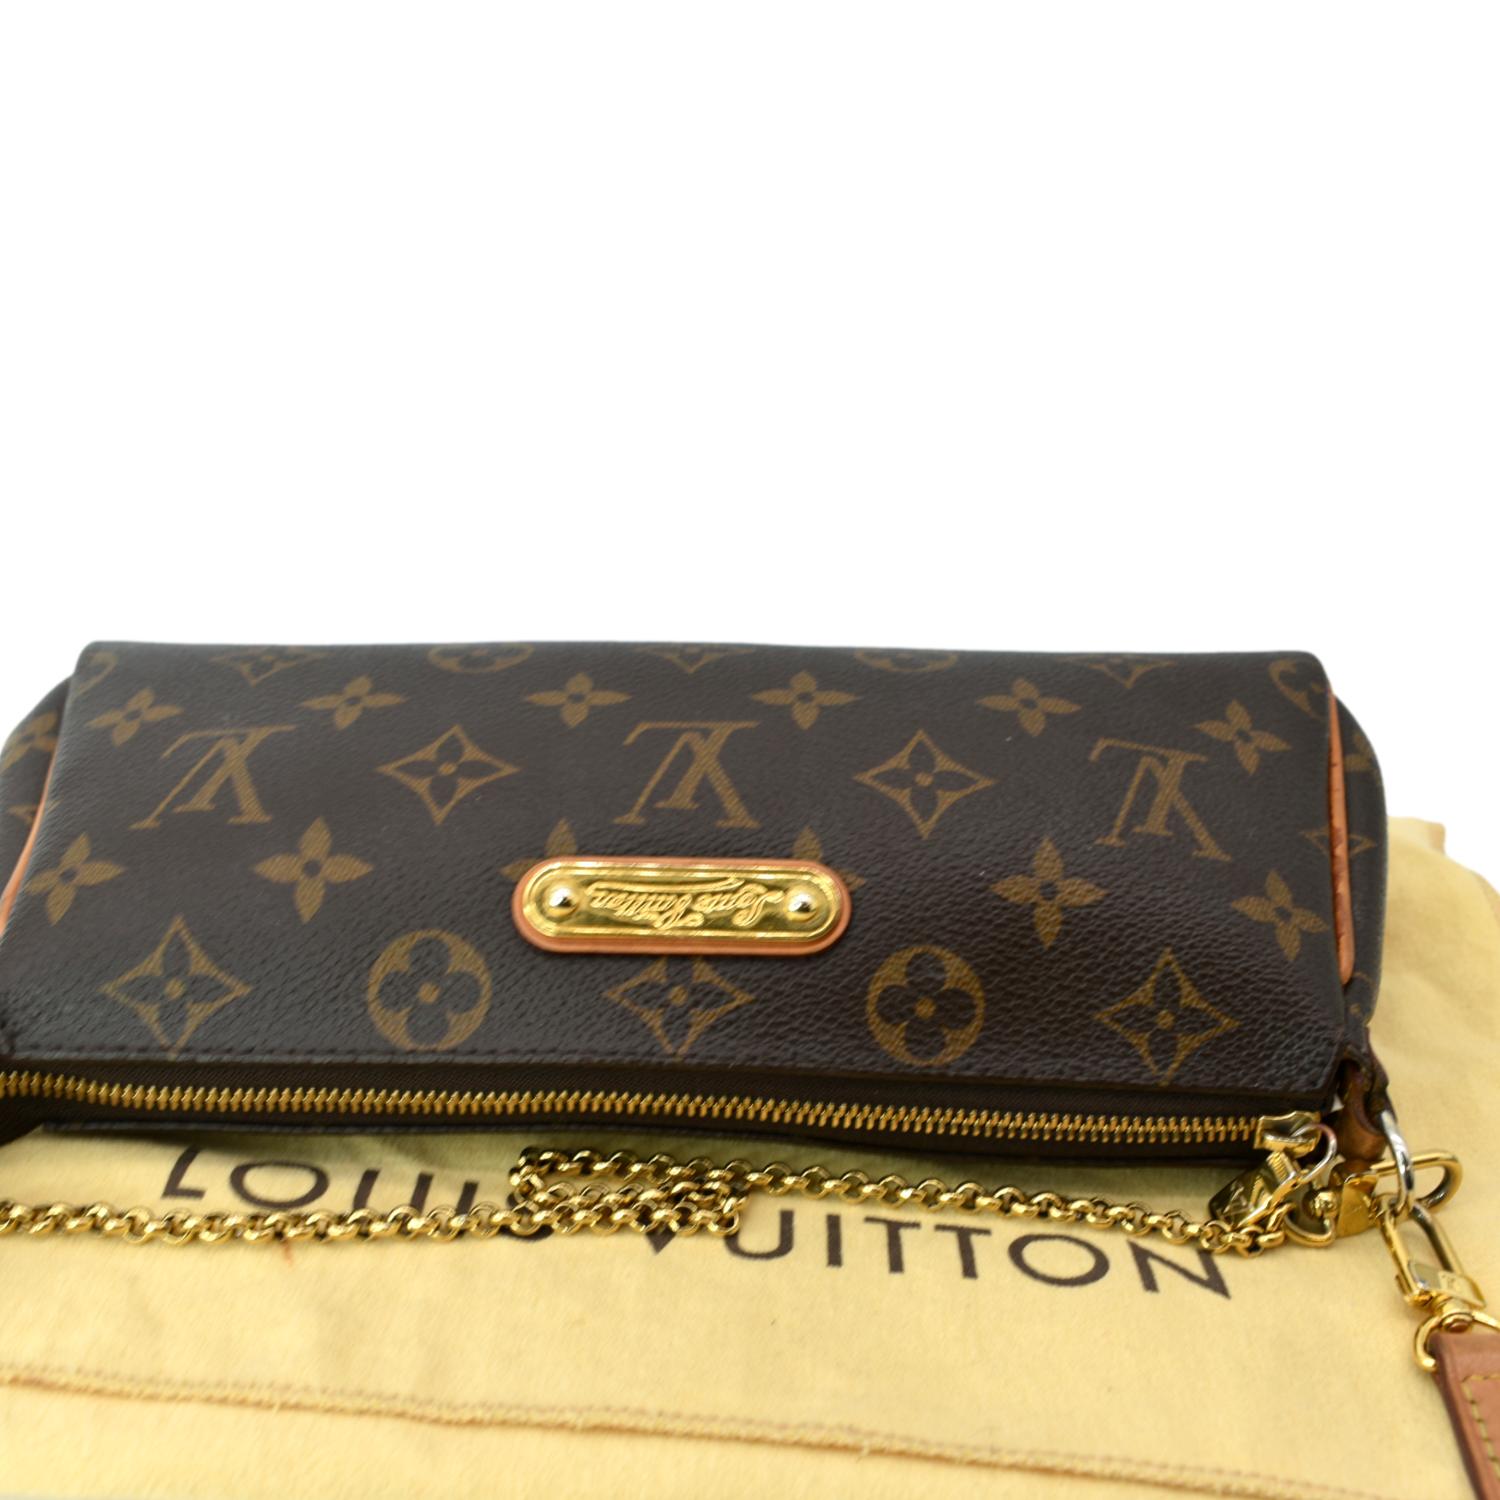 Louis Vuitton Eva Handbag Monogram Canvas Brown 2343861